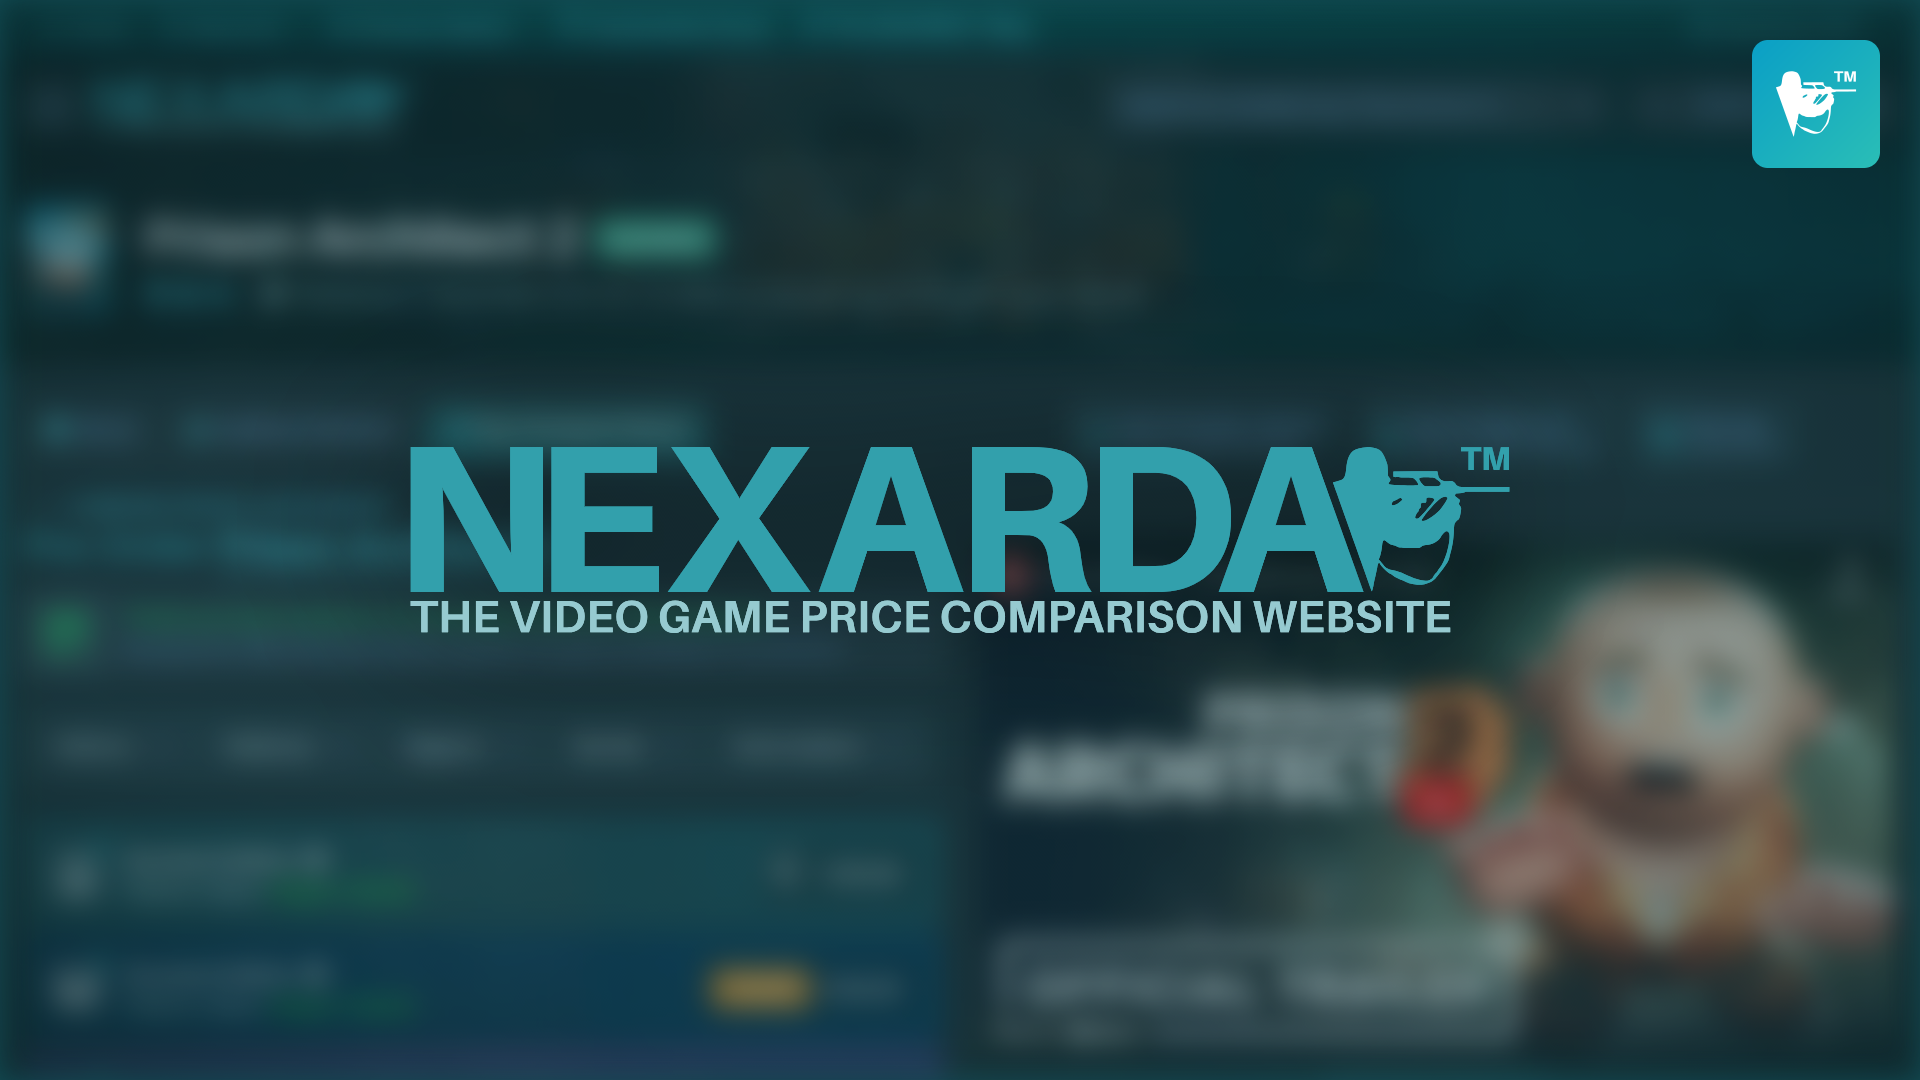 Meet NEXARDA™ - The video game price comparison website.